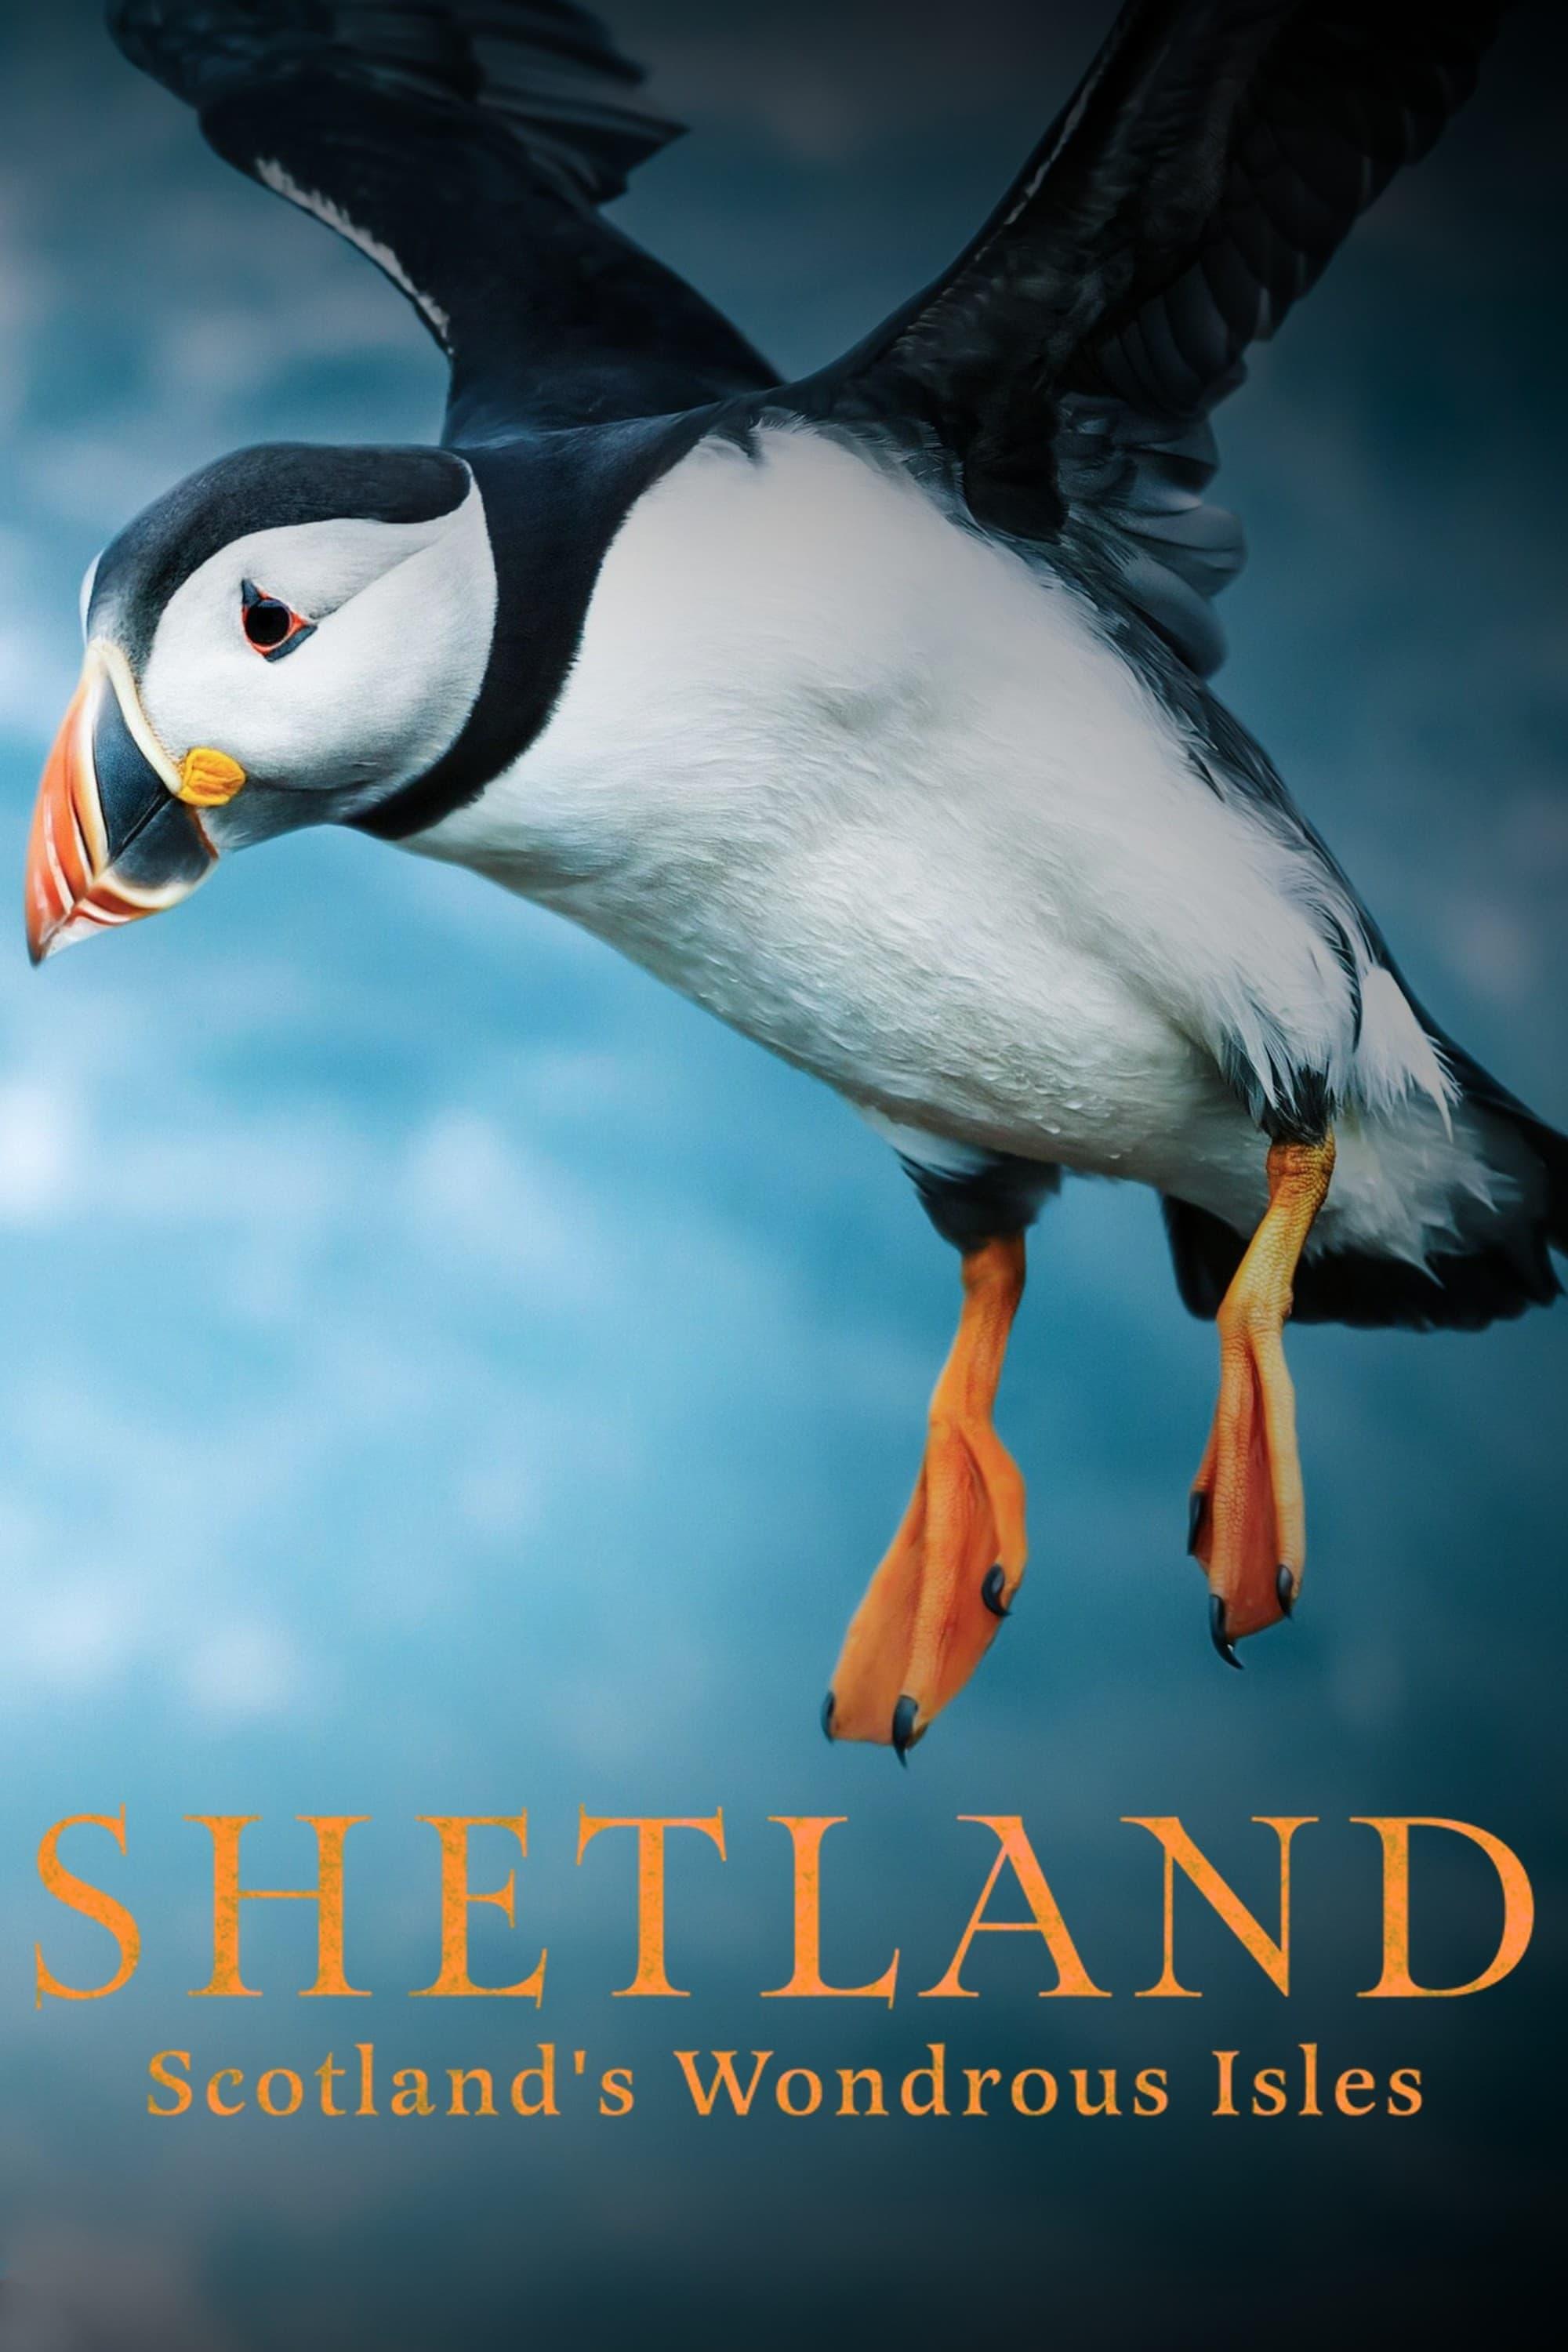 Shetland: Scotland's Wondrous Isles poster